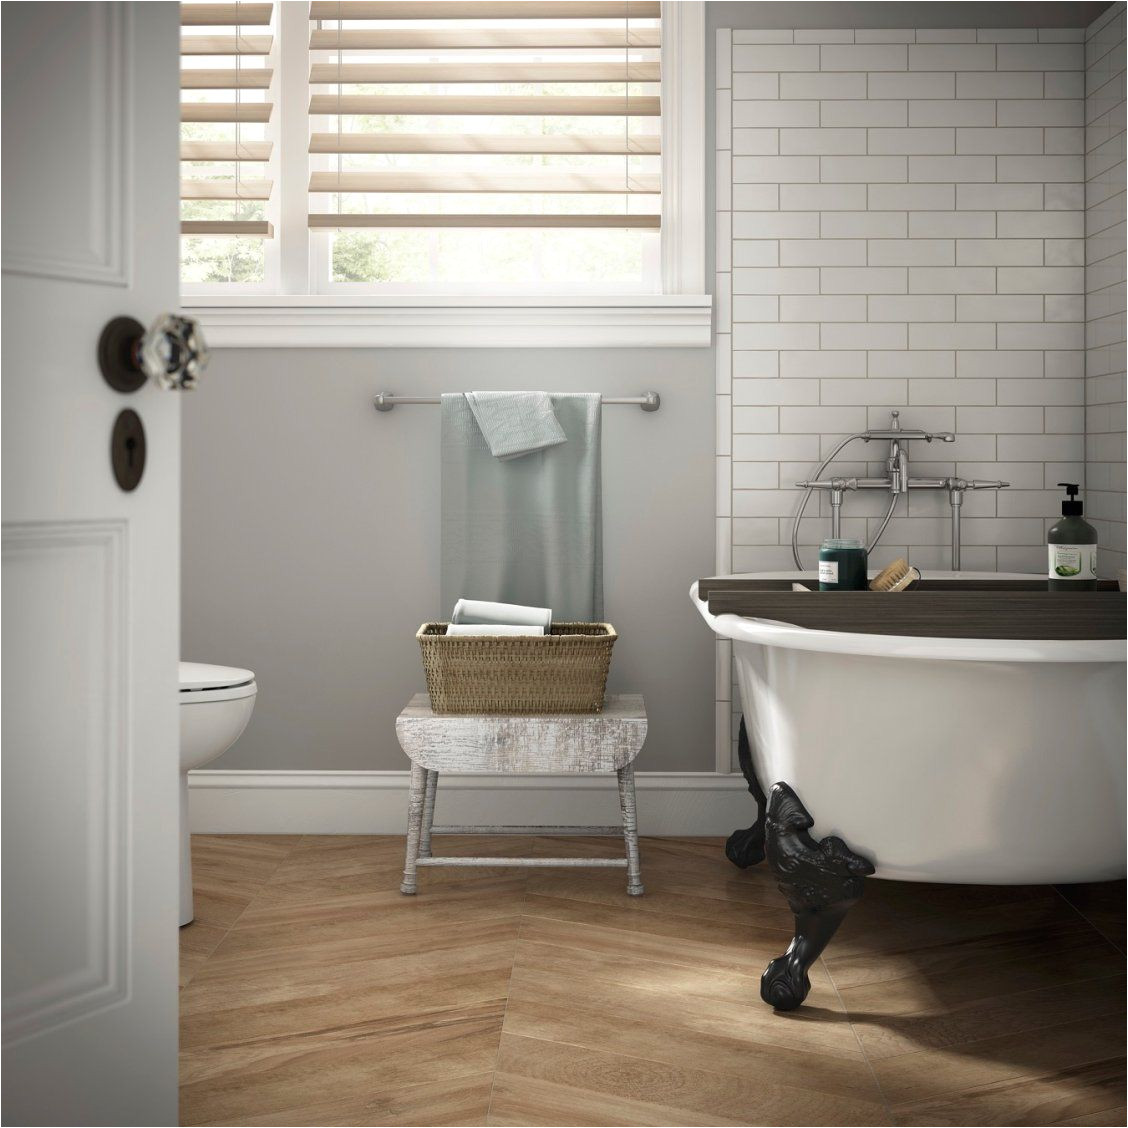 create a spa like bathroom with soft gray walls a clawfoot tub striking herringbone floors and classic white subway tiles around the tub